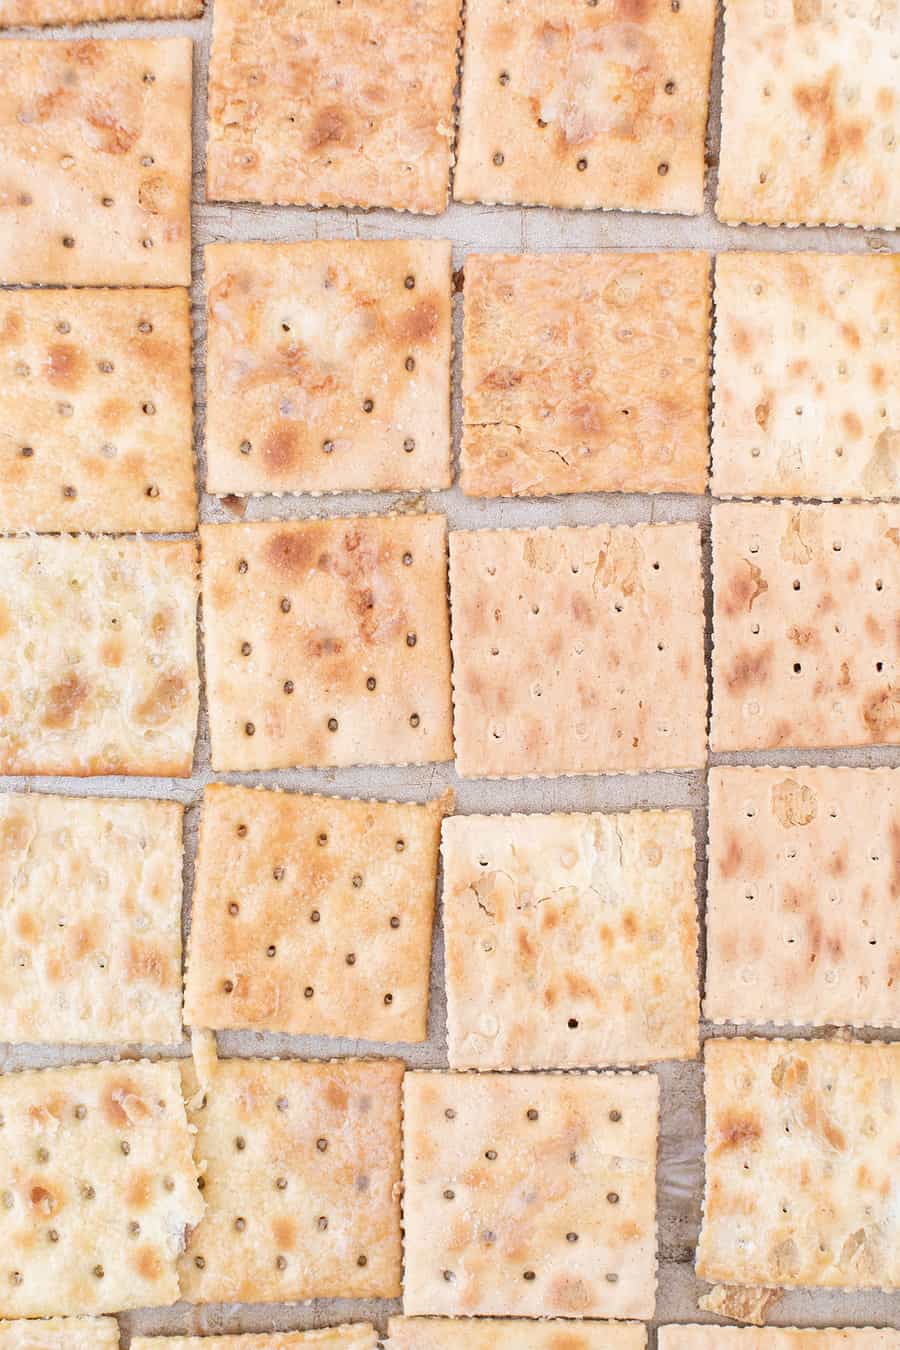 baked saltine crackers